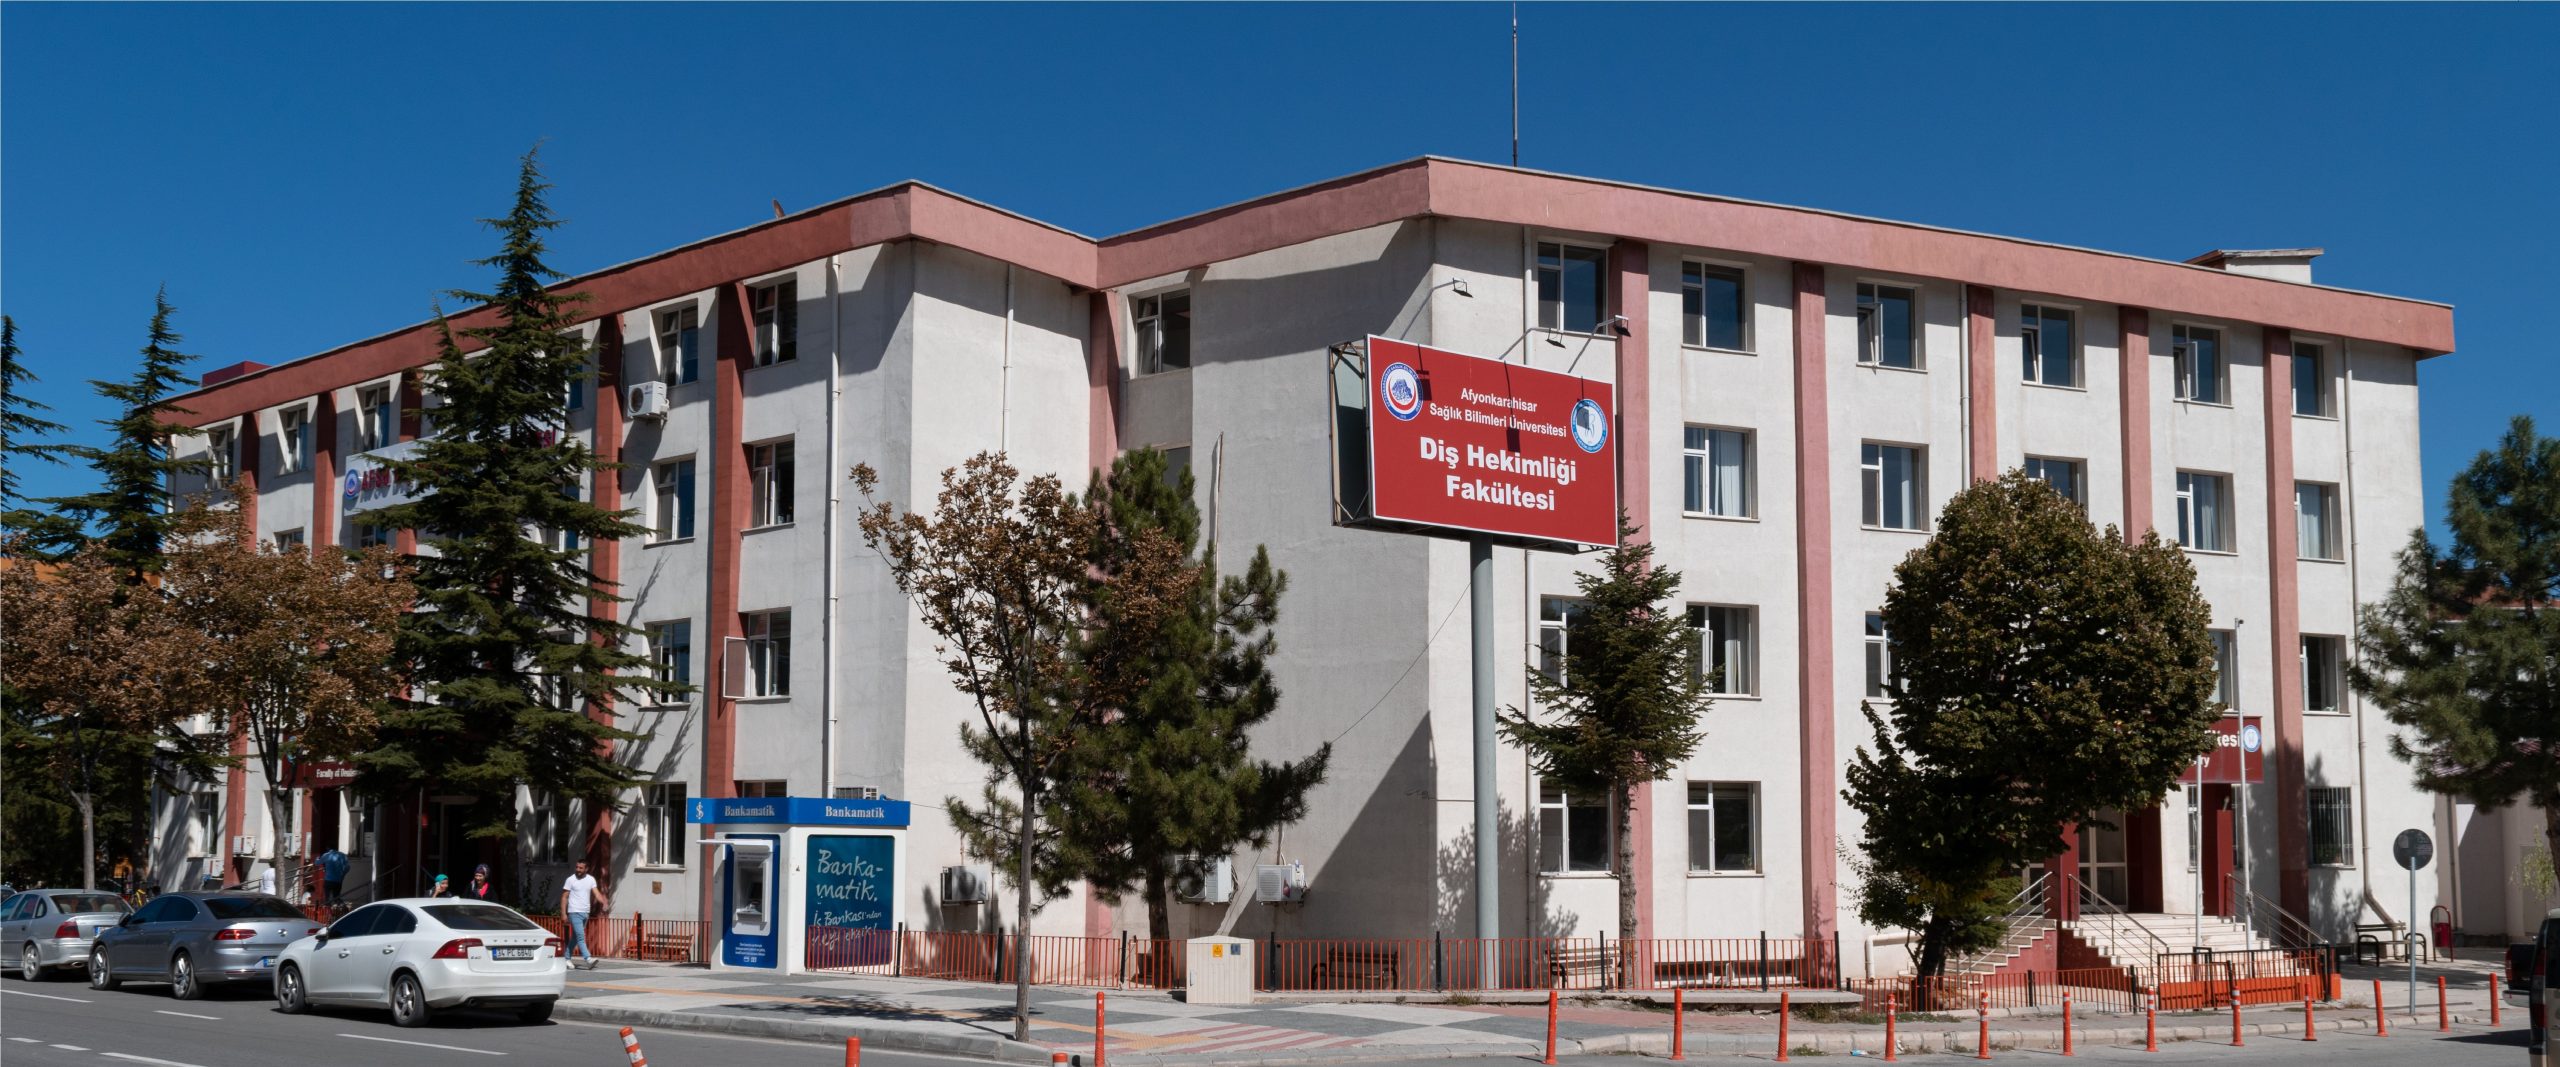 afyonsaglik universitesi find and study 3 - Afyonkarahisar Health Sciences University